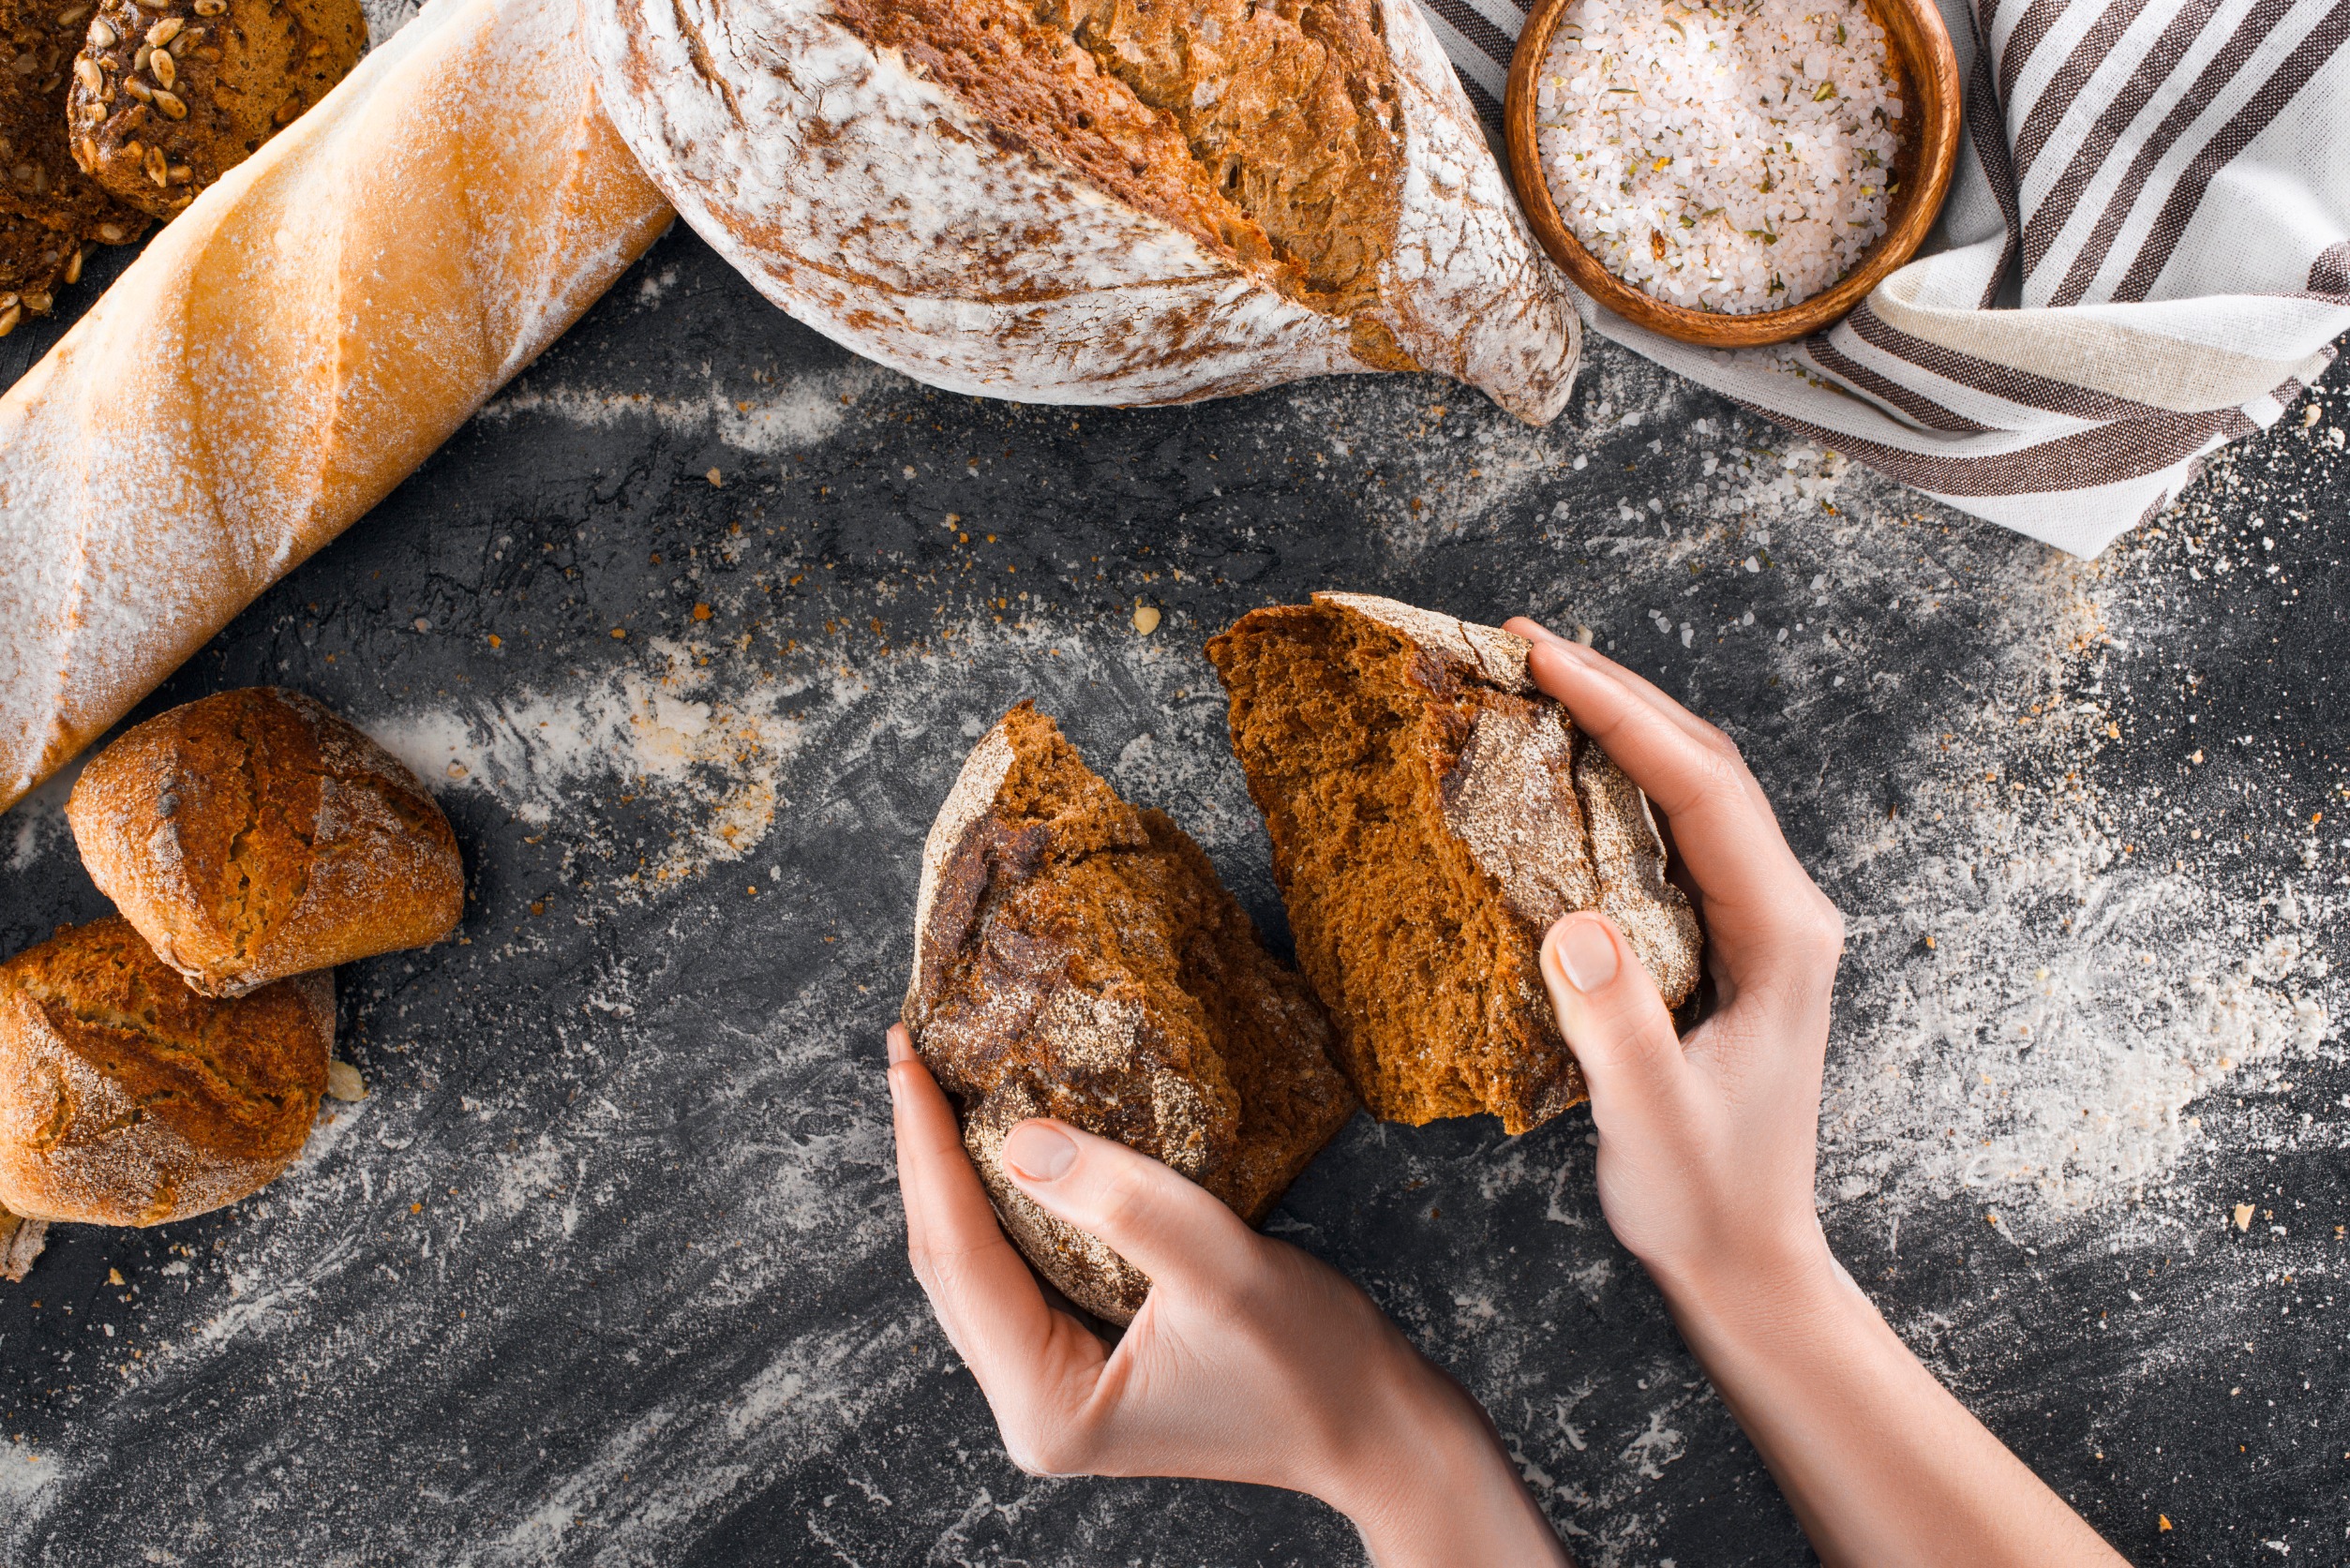 Hands holding a loaf of freshly baked bread